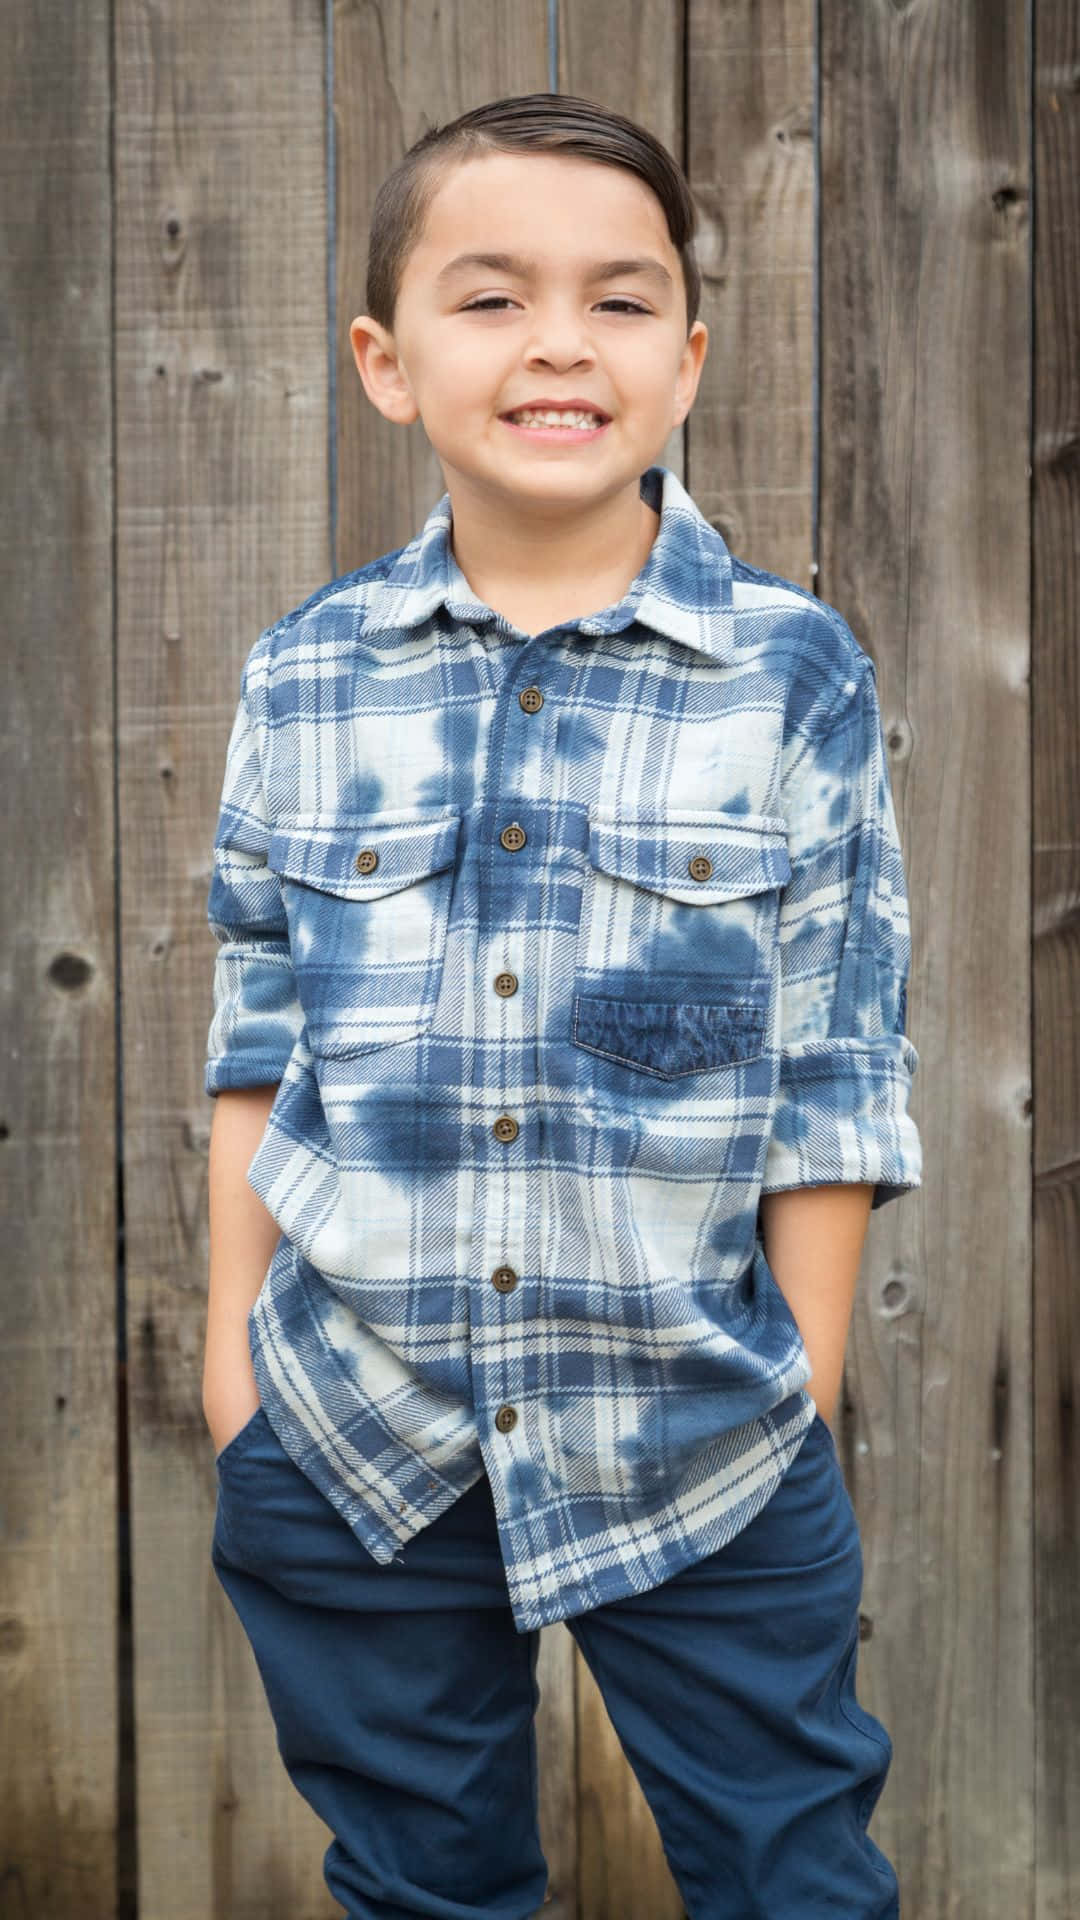 Smiling Boyin Plaid Shirt Wallpaper